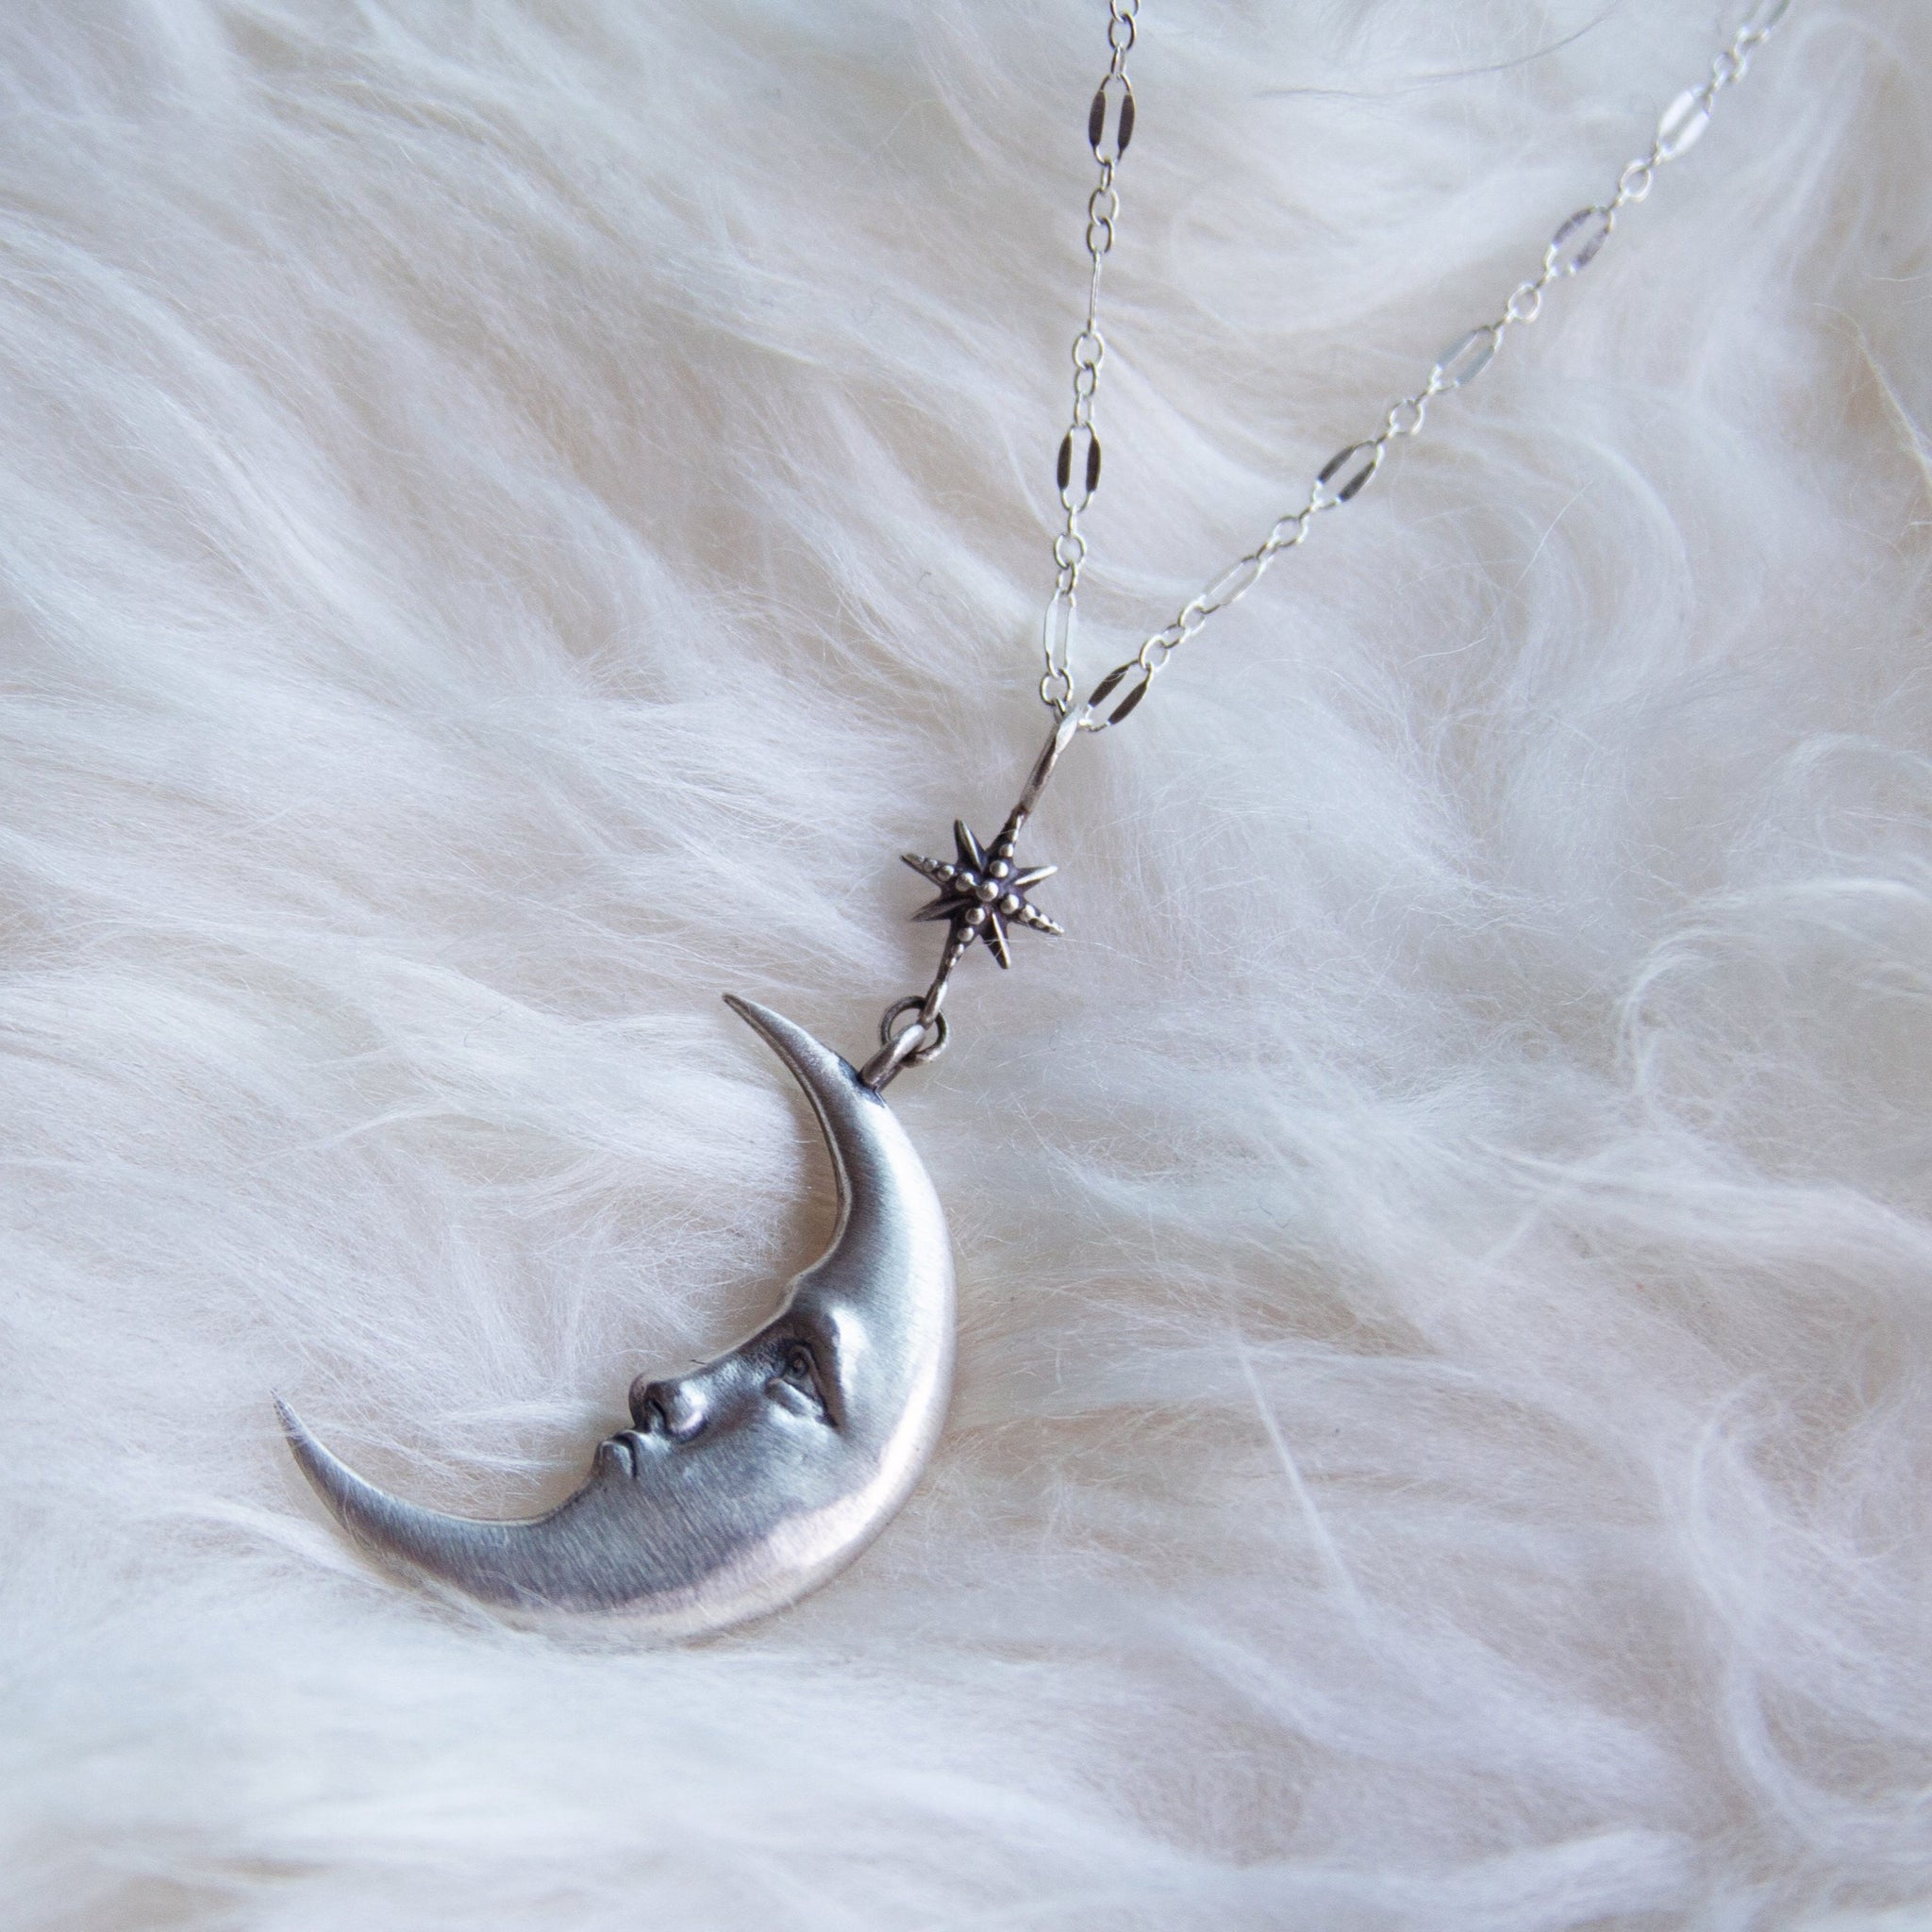 Dreamweaver necklace in sterling silver